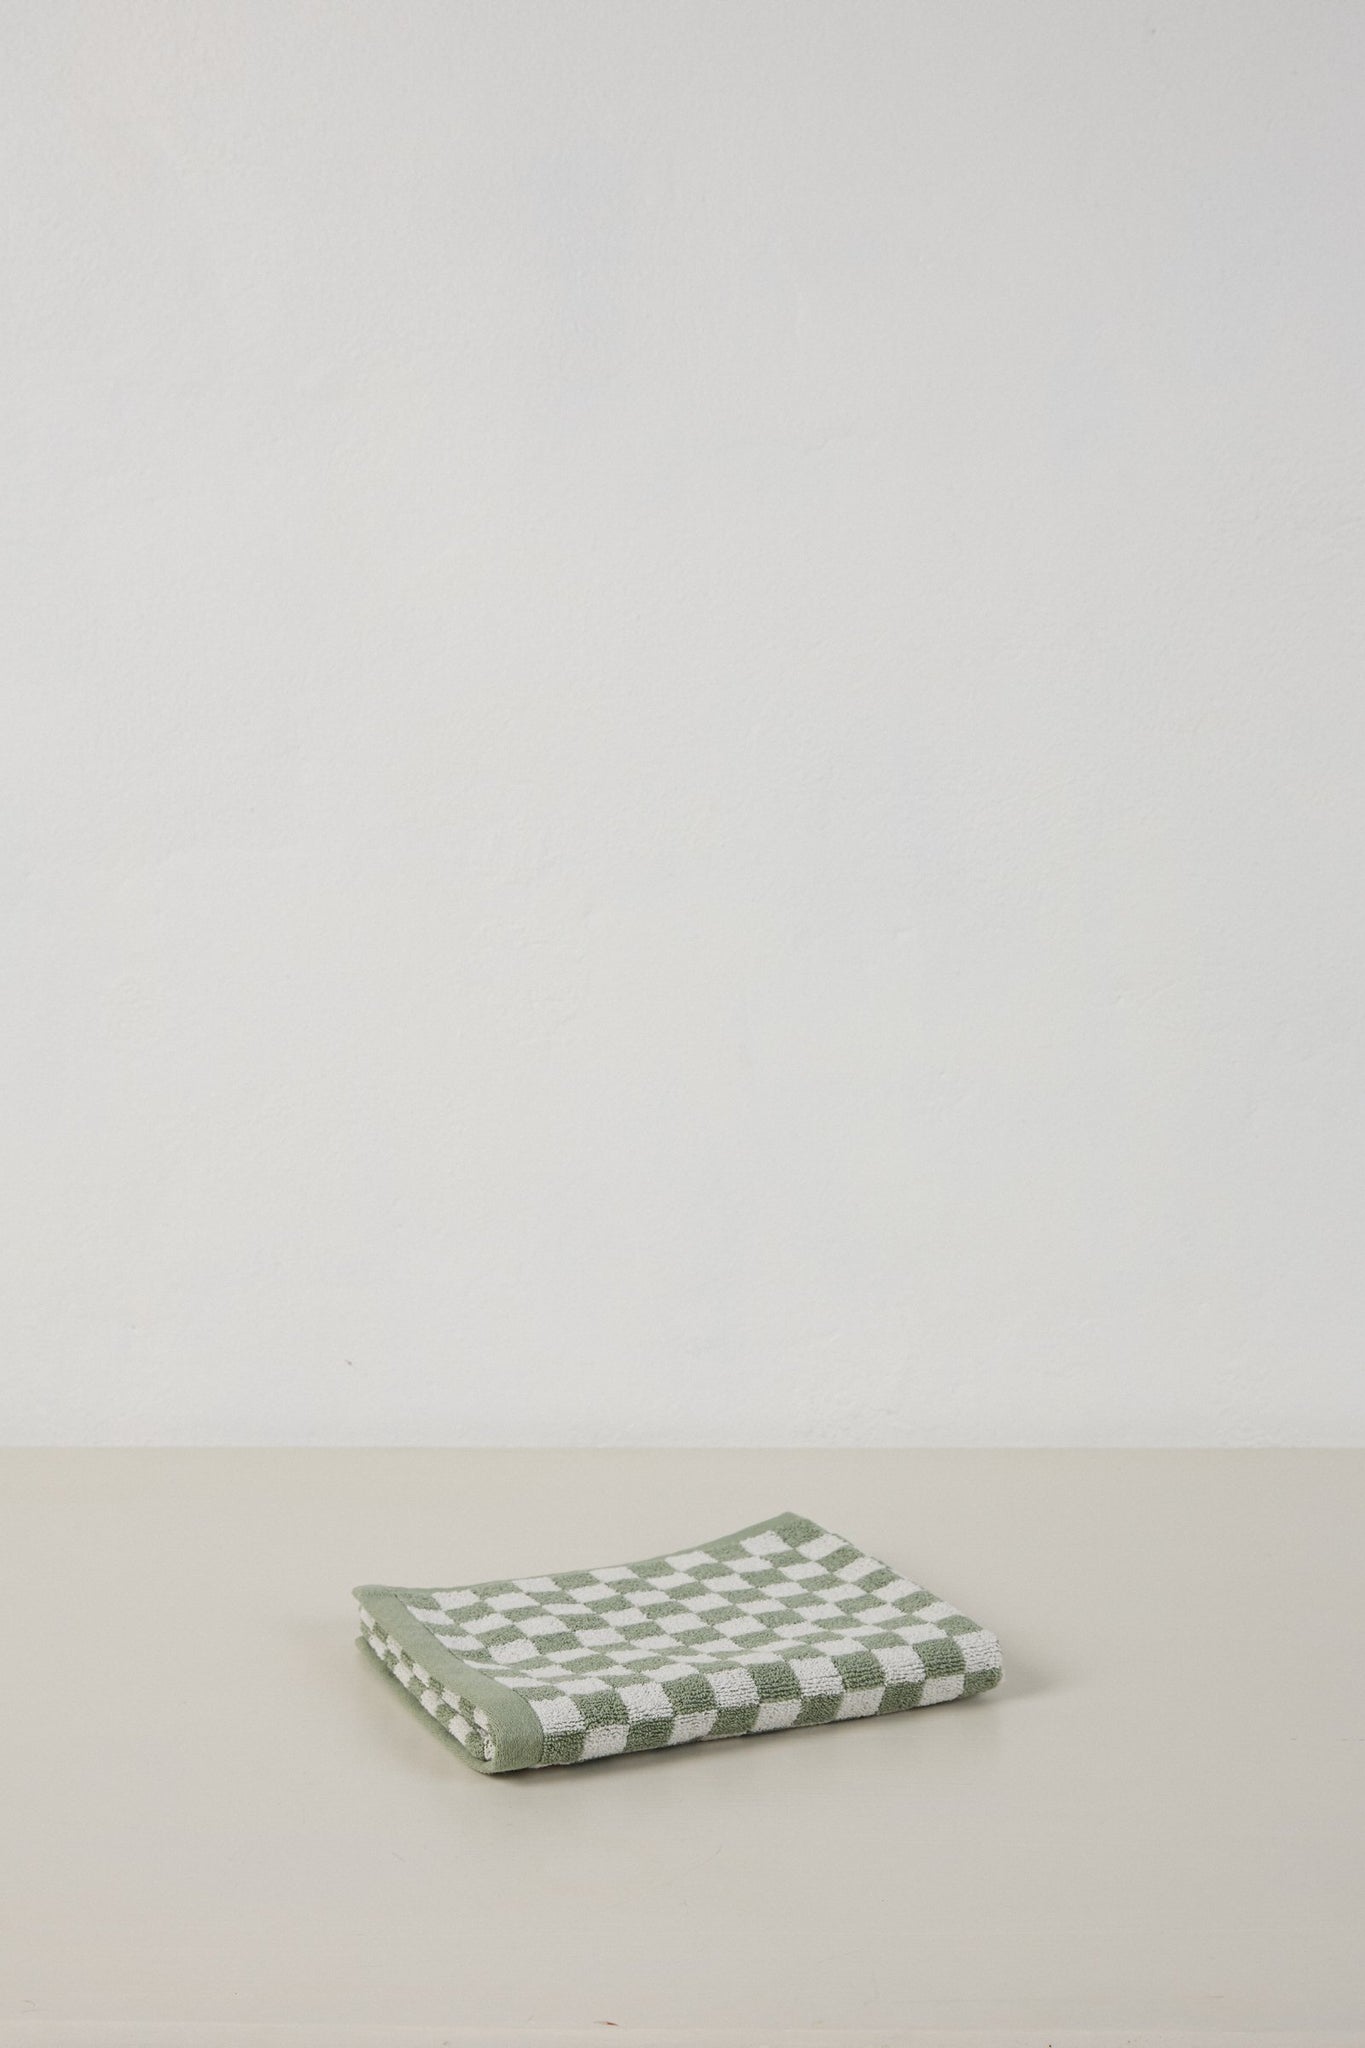 Josephine Hand towel in Sage & Chalk by Baina